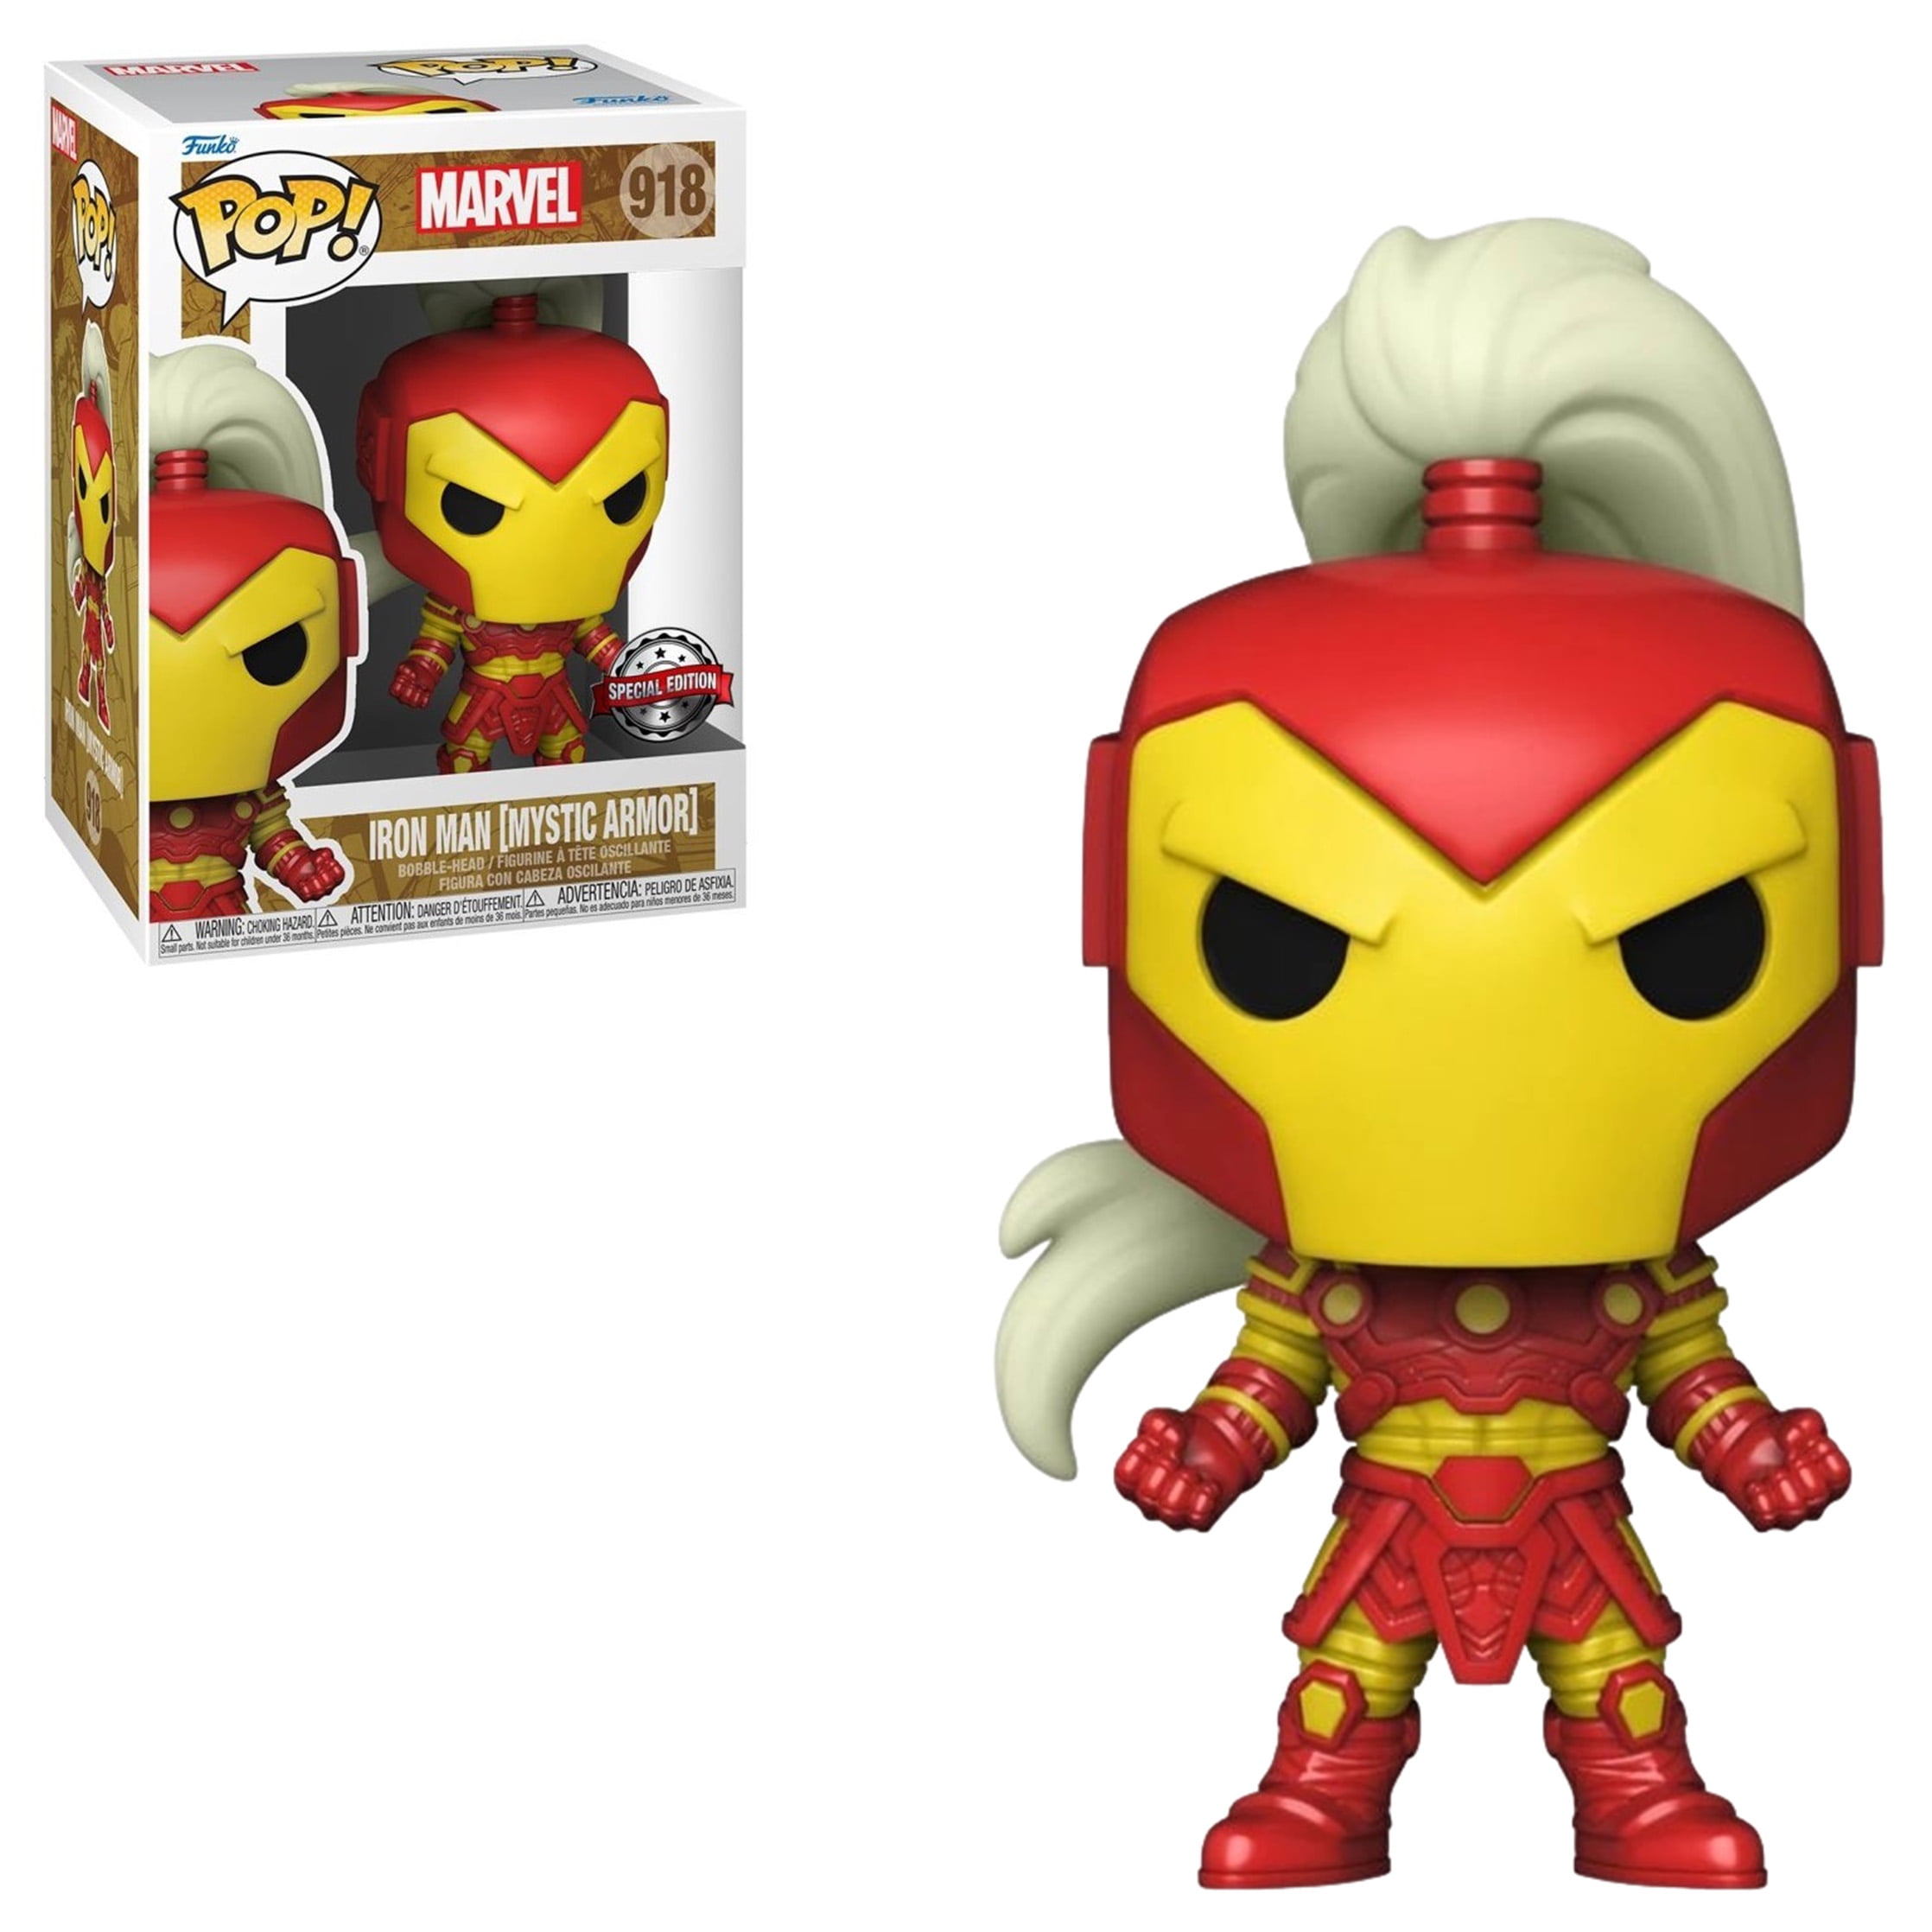 Funko POP! Marvel Iron Man (Mystic Armor) Exclusive 